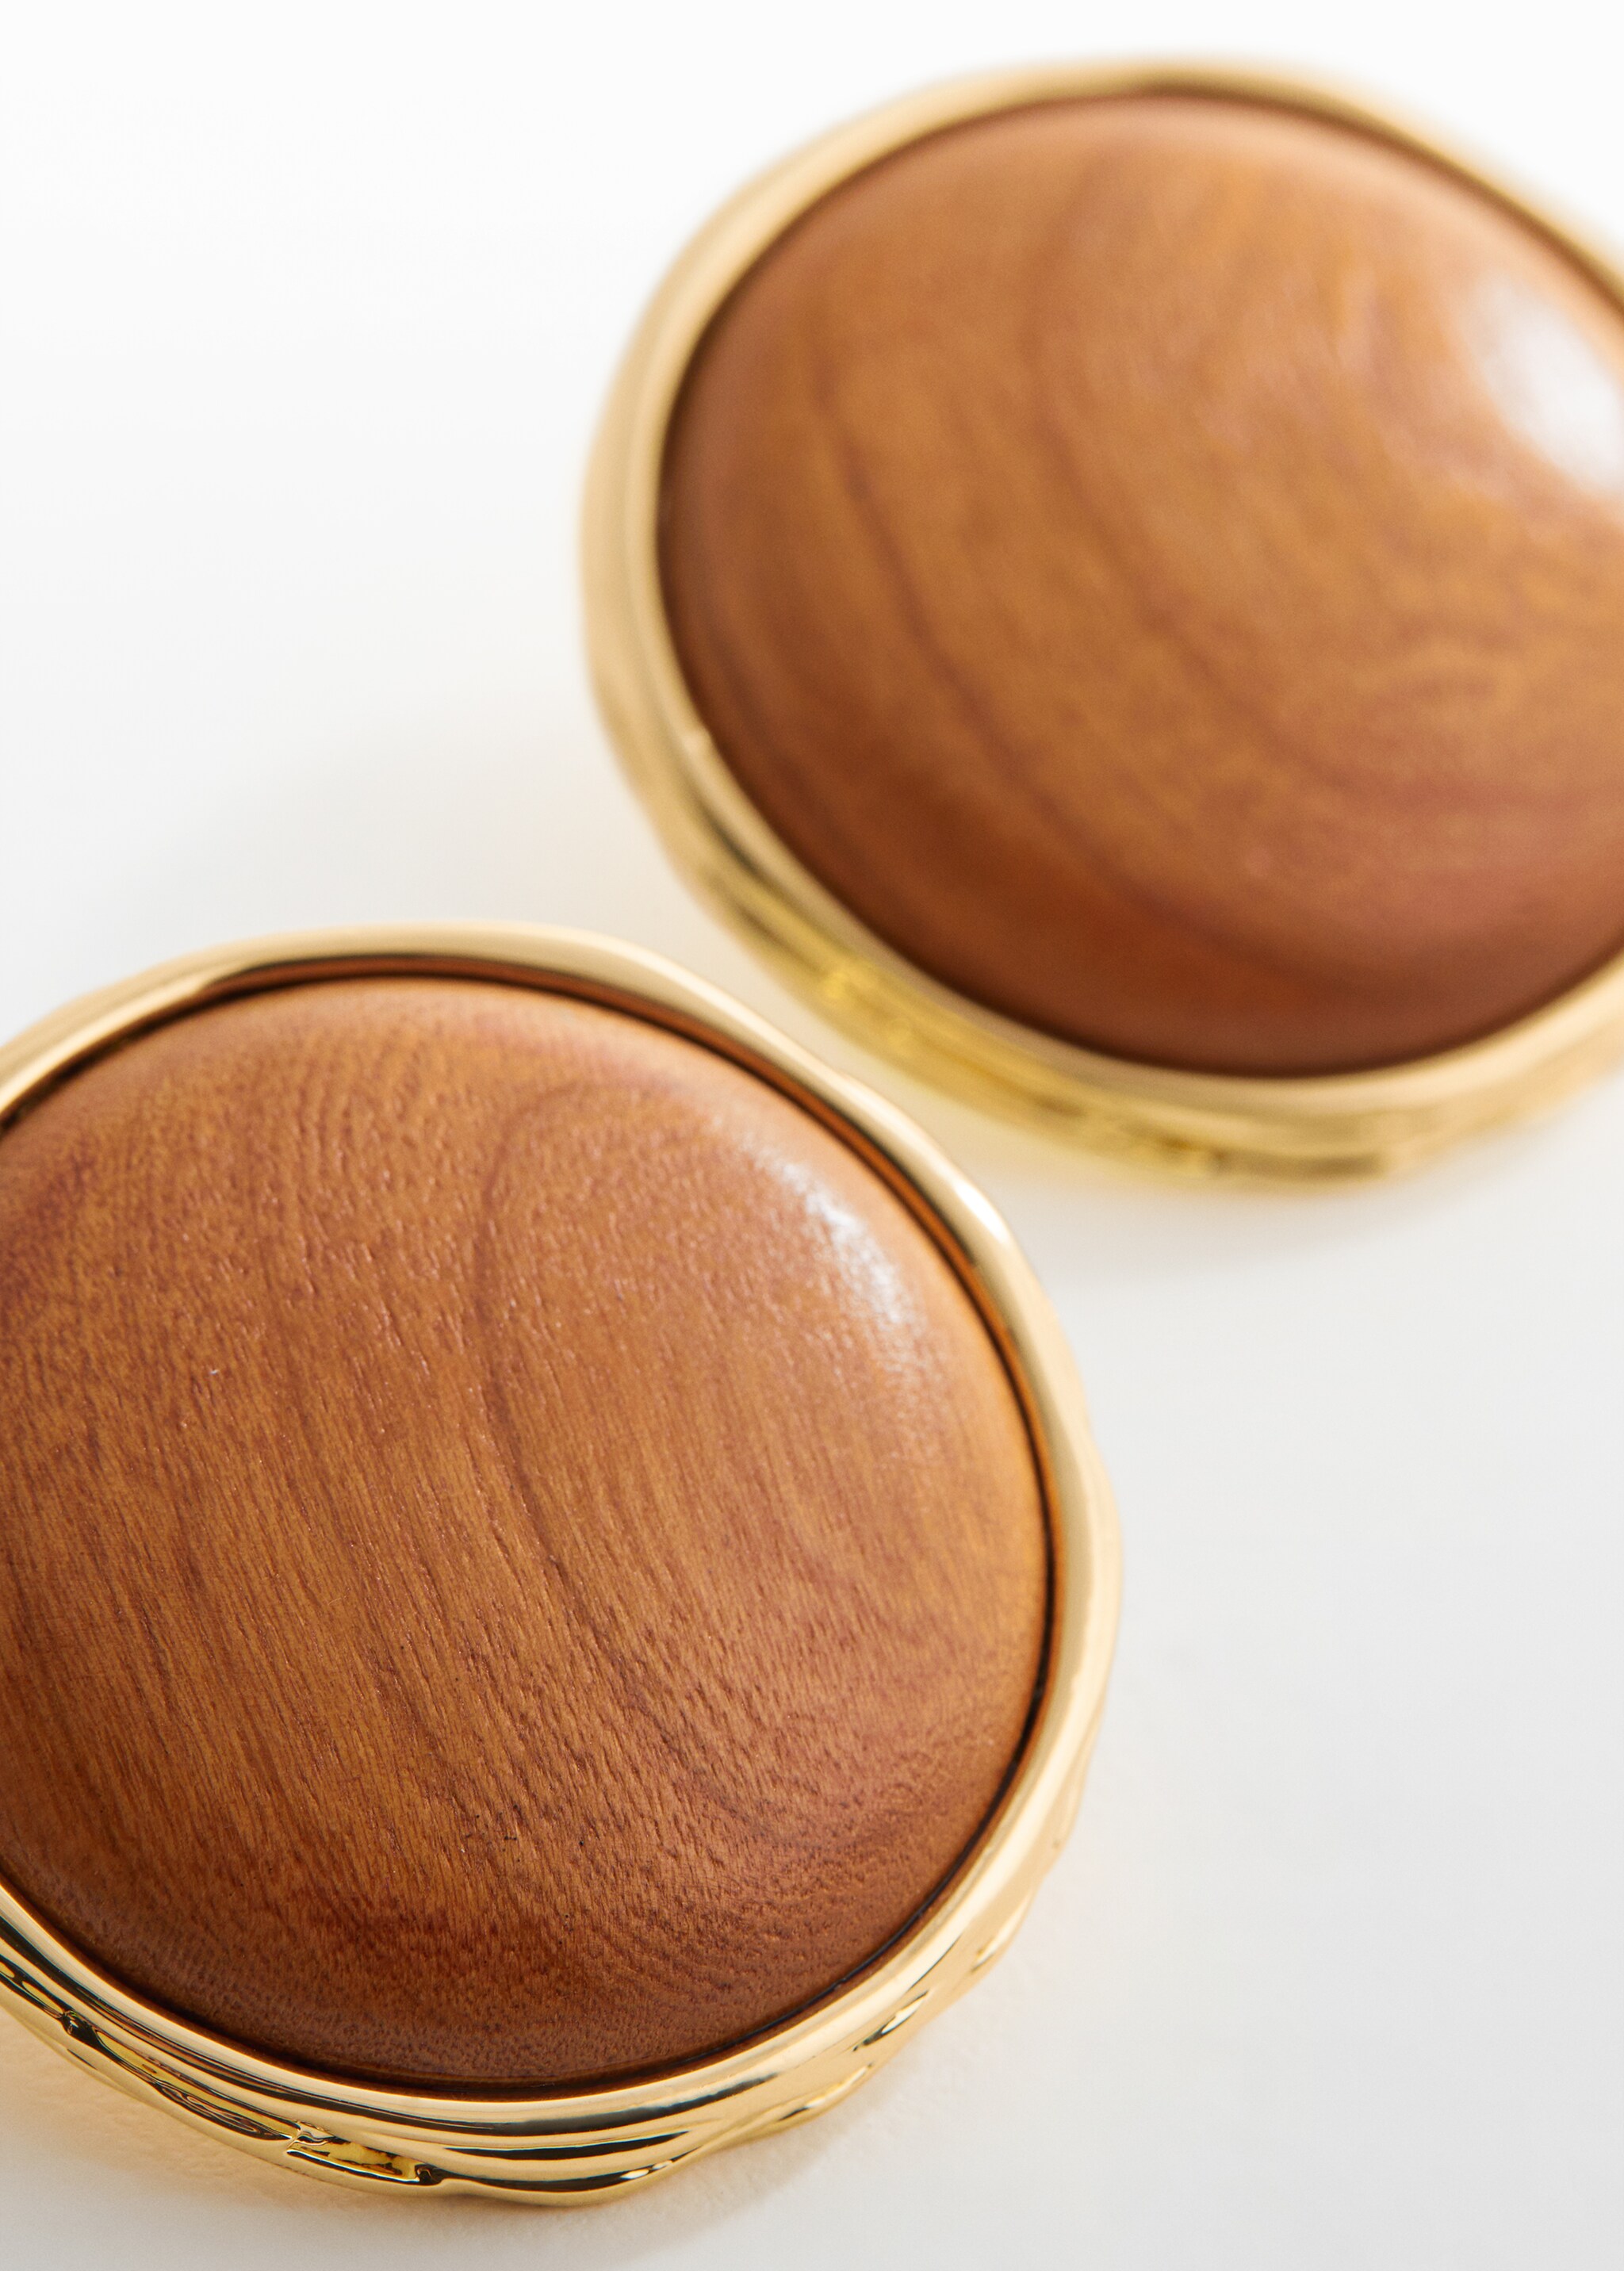 Boucles d'oreilles bois design circulaire - Plan moyen